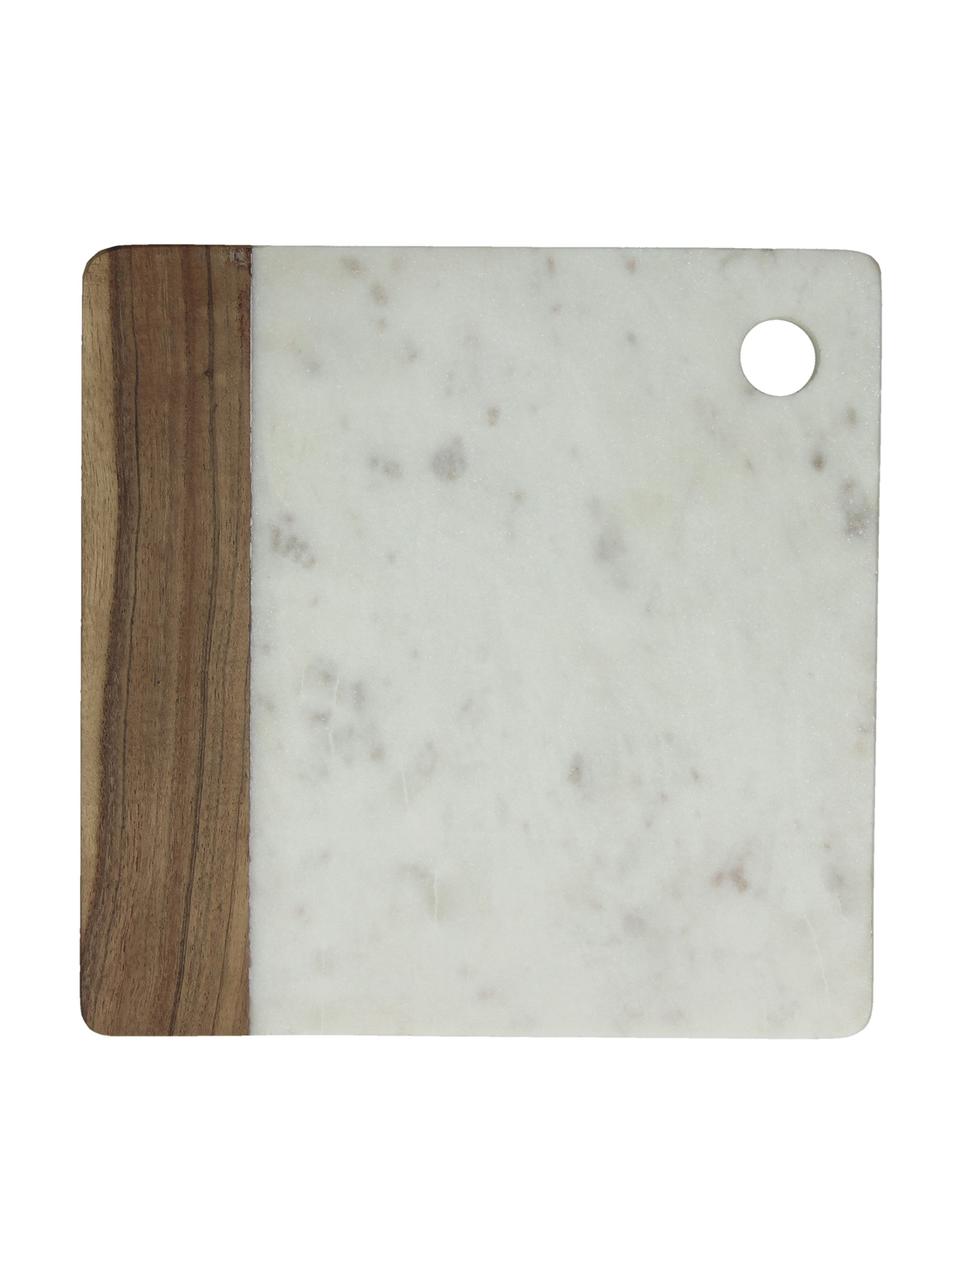 Marmeren snijplank Idli, L 25 x B 25 cm, Marmer, acaciahout, Wit gemarmerd, acaciakleurig, 25 x 25 cm